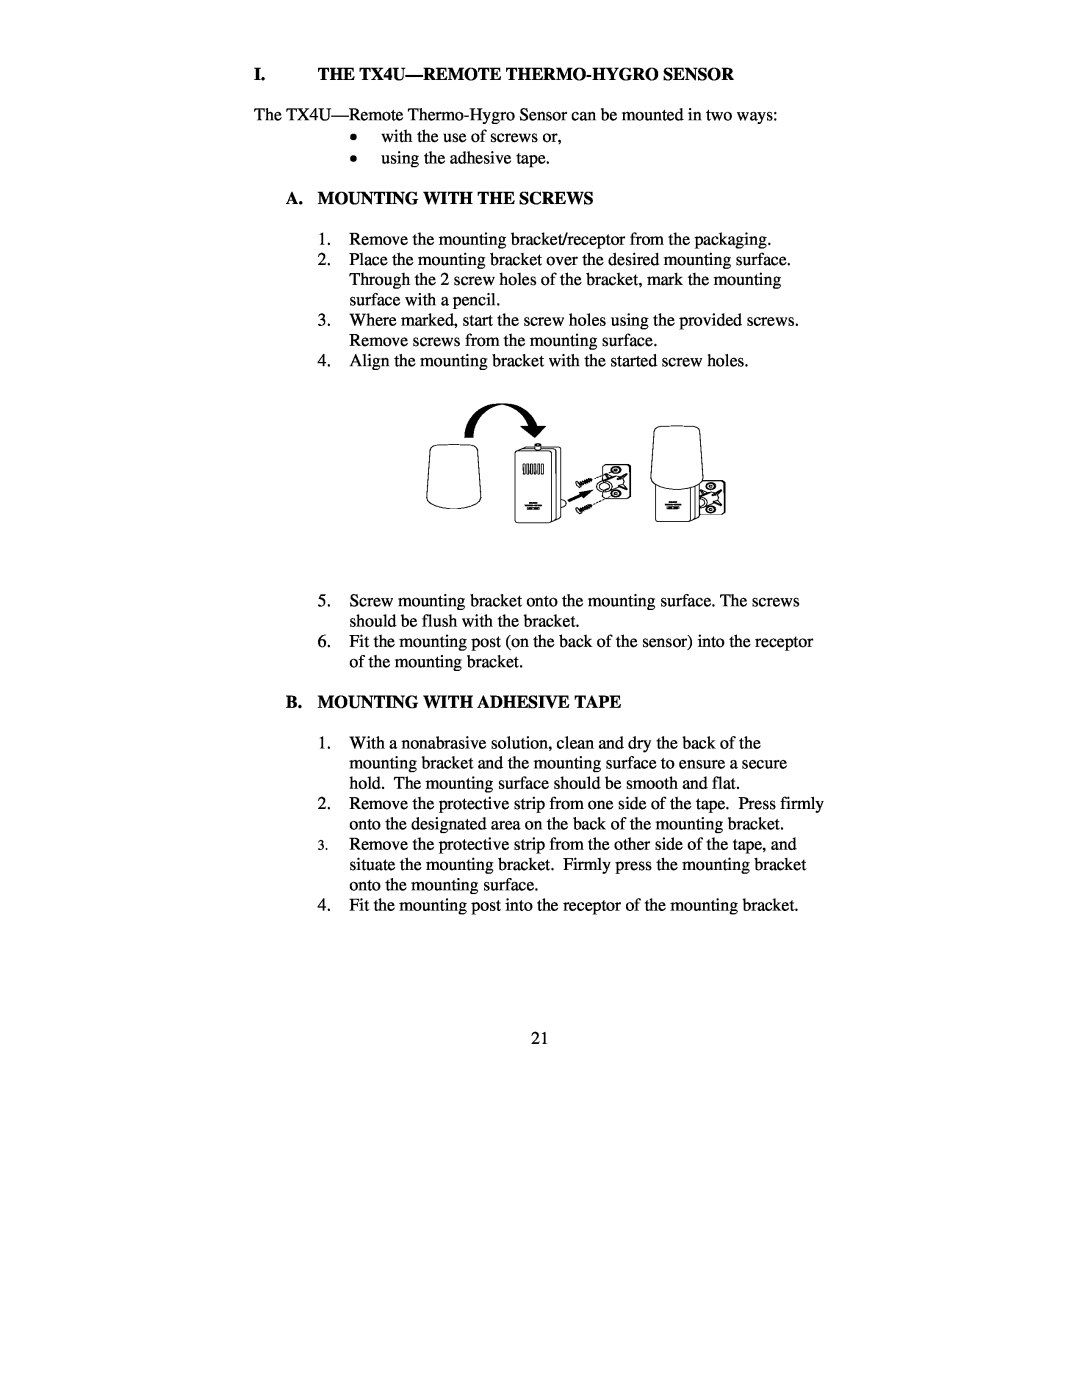 La Crosse Technology WS-7095U, TX5U instruction manual I. THE TX4U-REMOTE THERMO-HYGRO SENSOR, A. Mounting With The Screws 